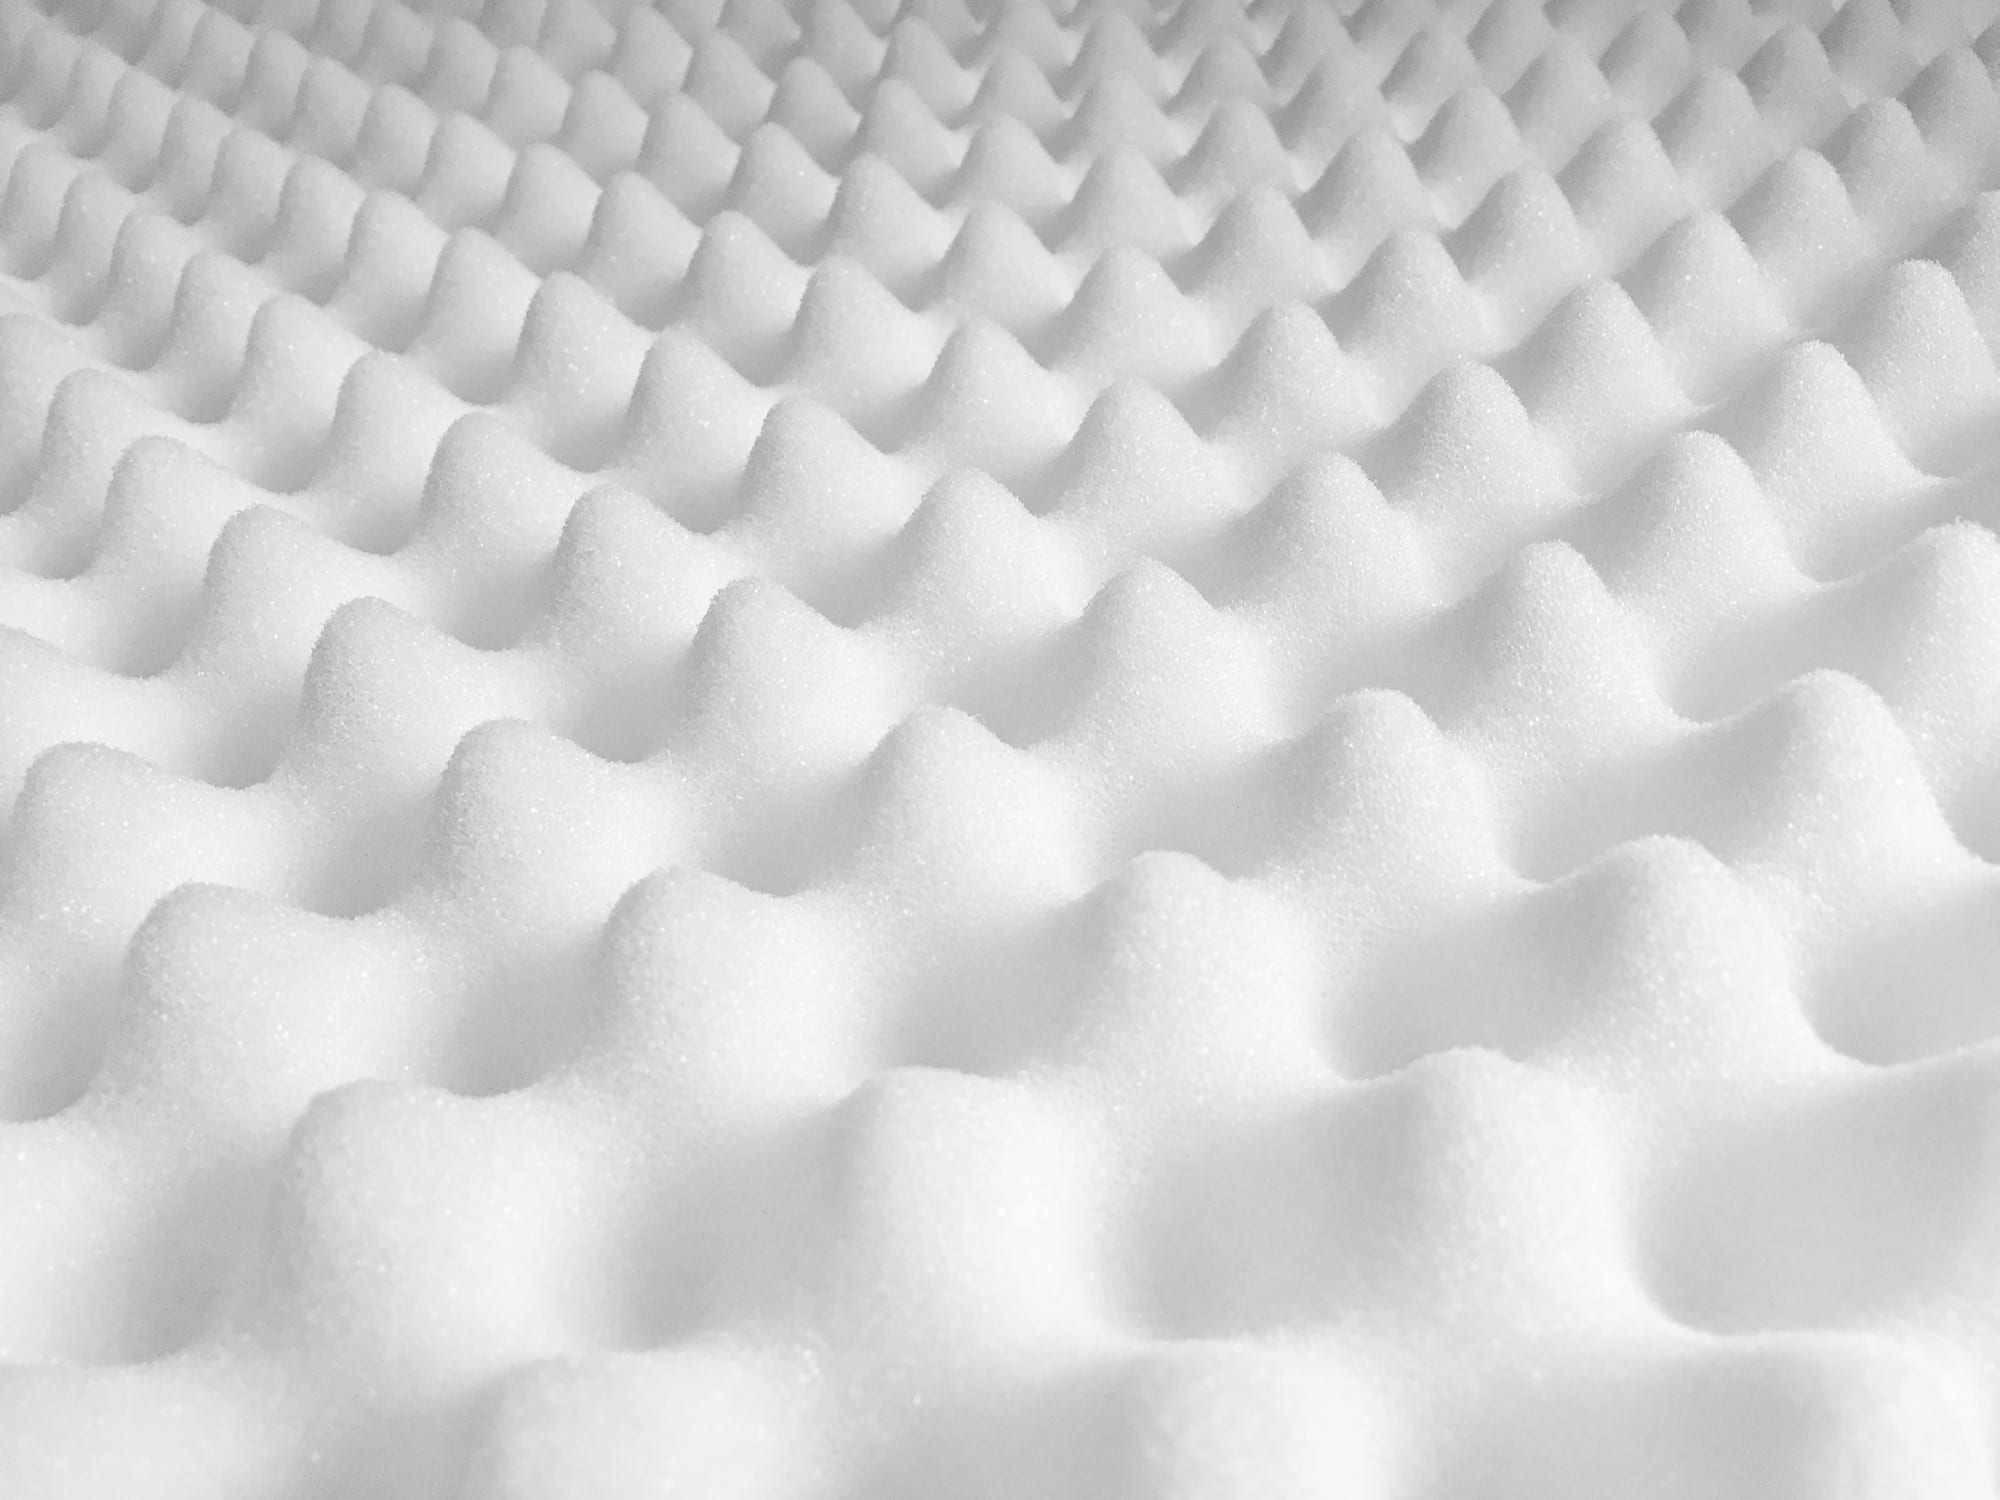 egg crate mattress pad vs memory foam